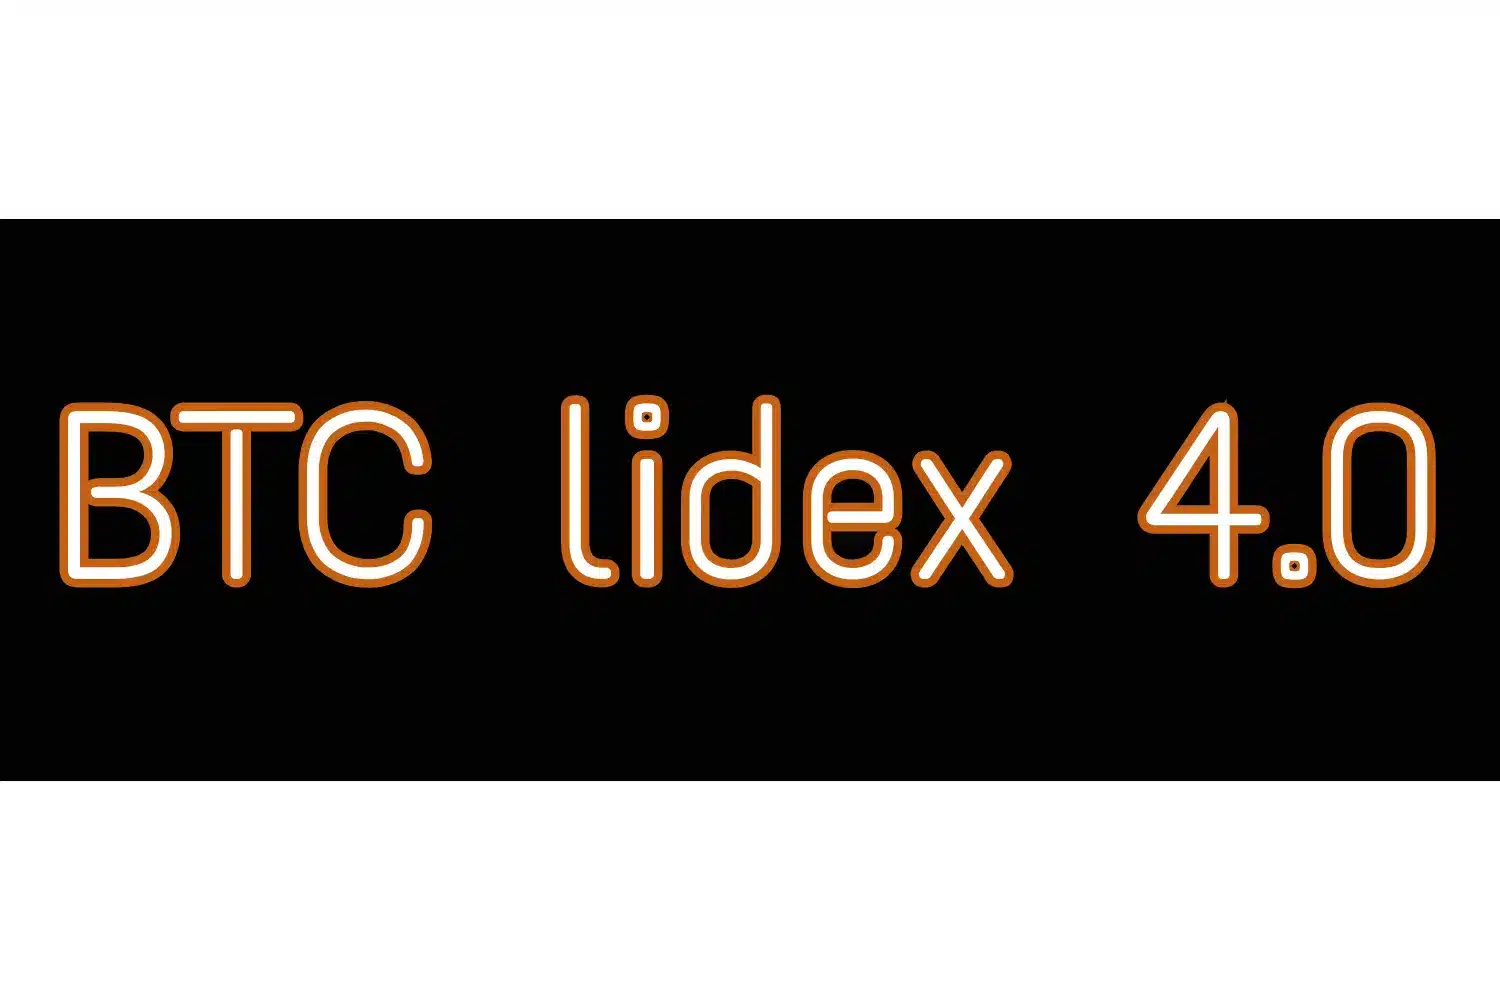 4.0 Bit Lidex Signup